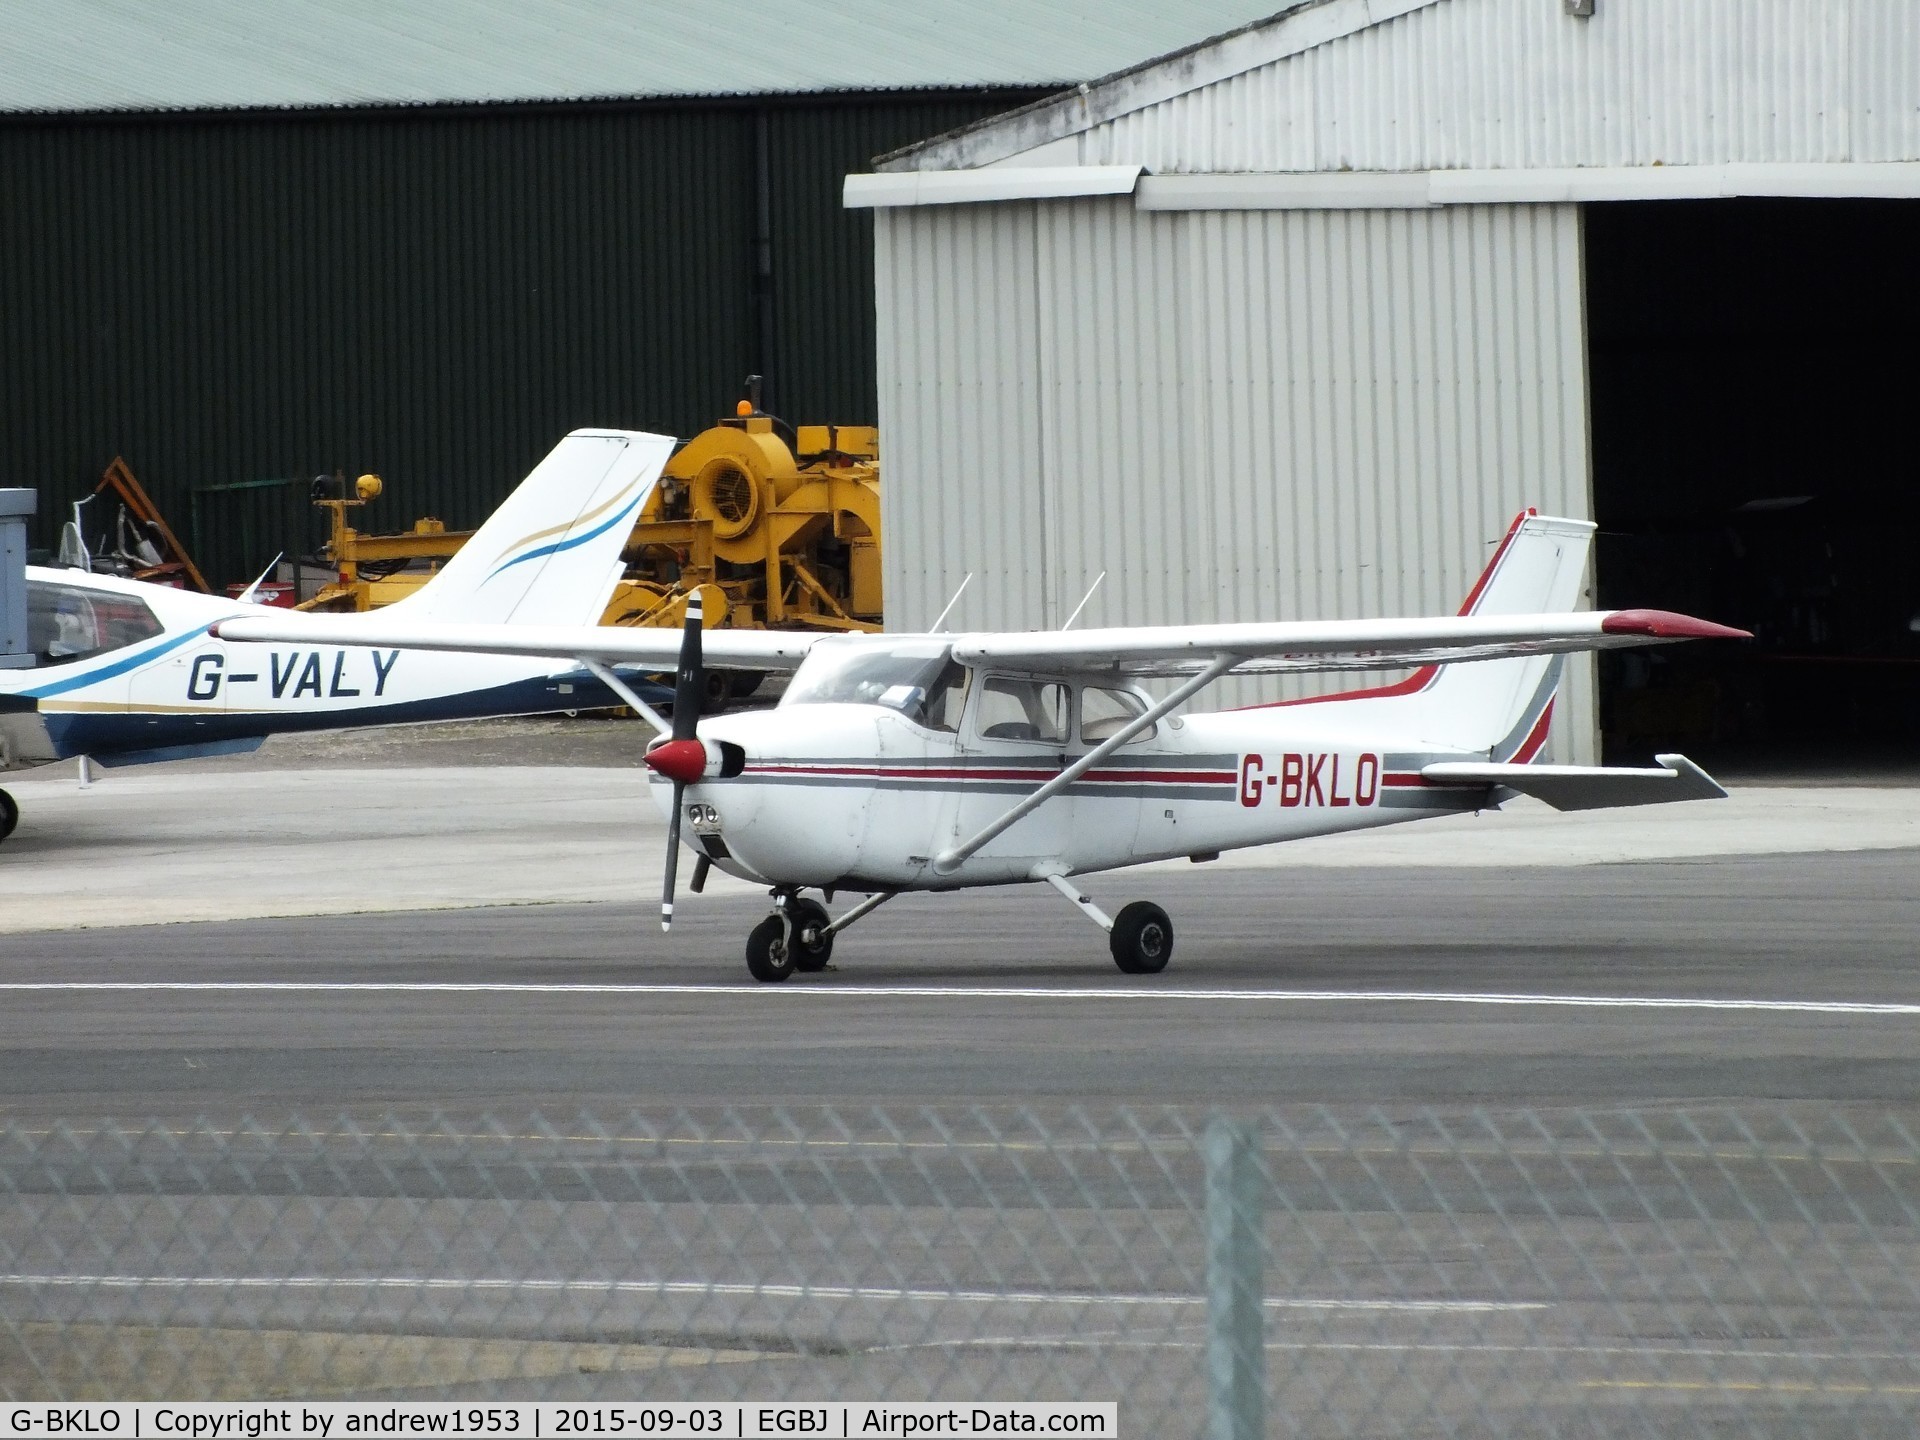 G-BKLO, 1975 Reims F172M ll Skyhawk C/N 1380, G-BKLO at Gloucestershire Airport.